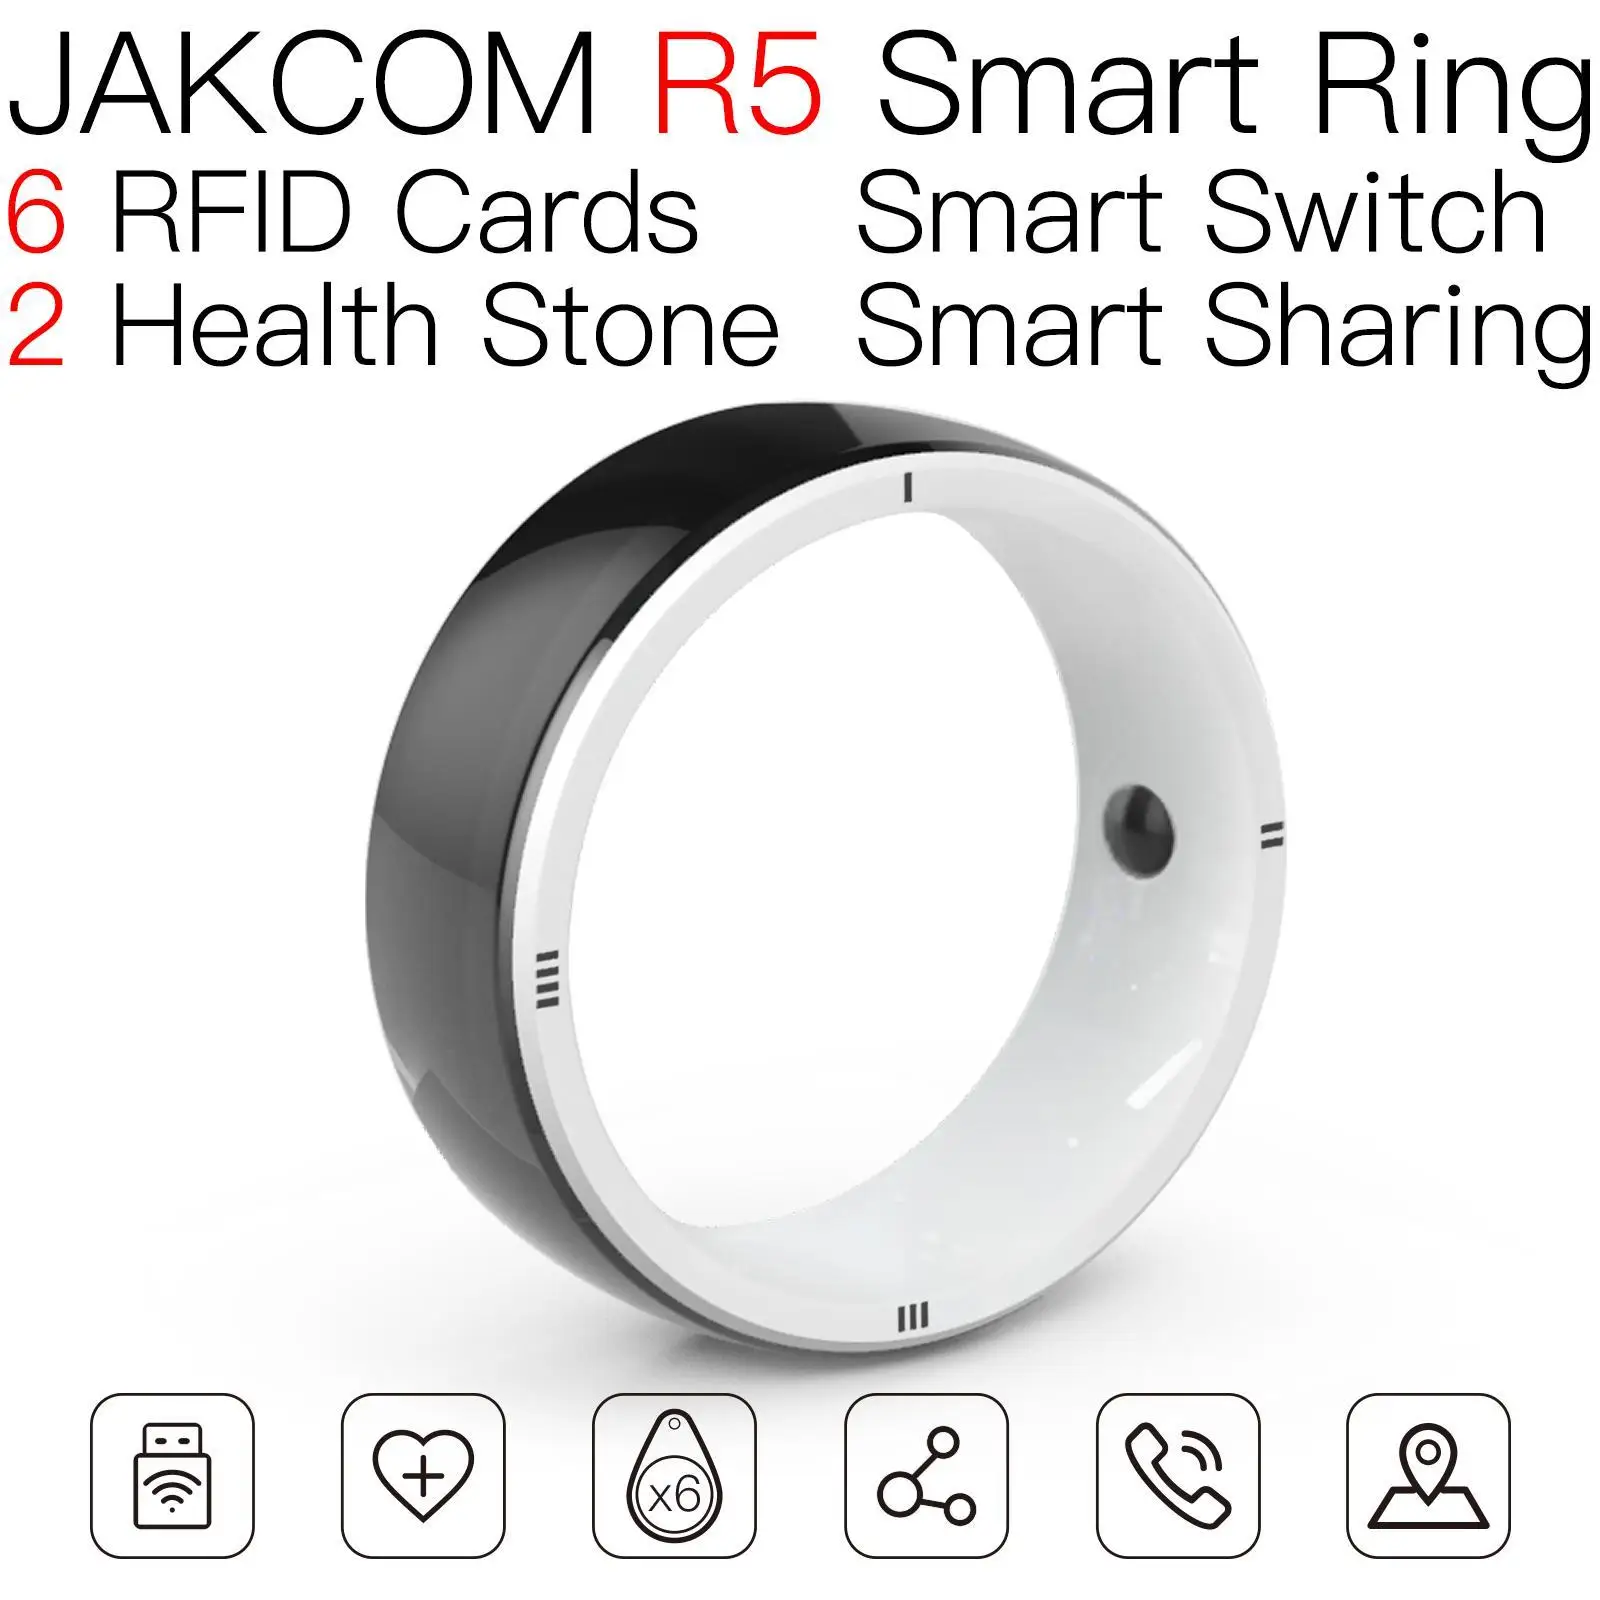 

JAKCOM R5 Smart Ring Newer than card id chip serif clone oil coin copy changeable key tag rfid long range 13 56mhz uid nfs bra